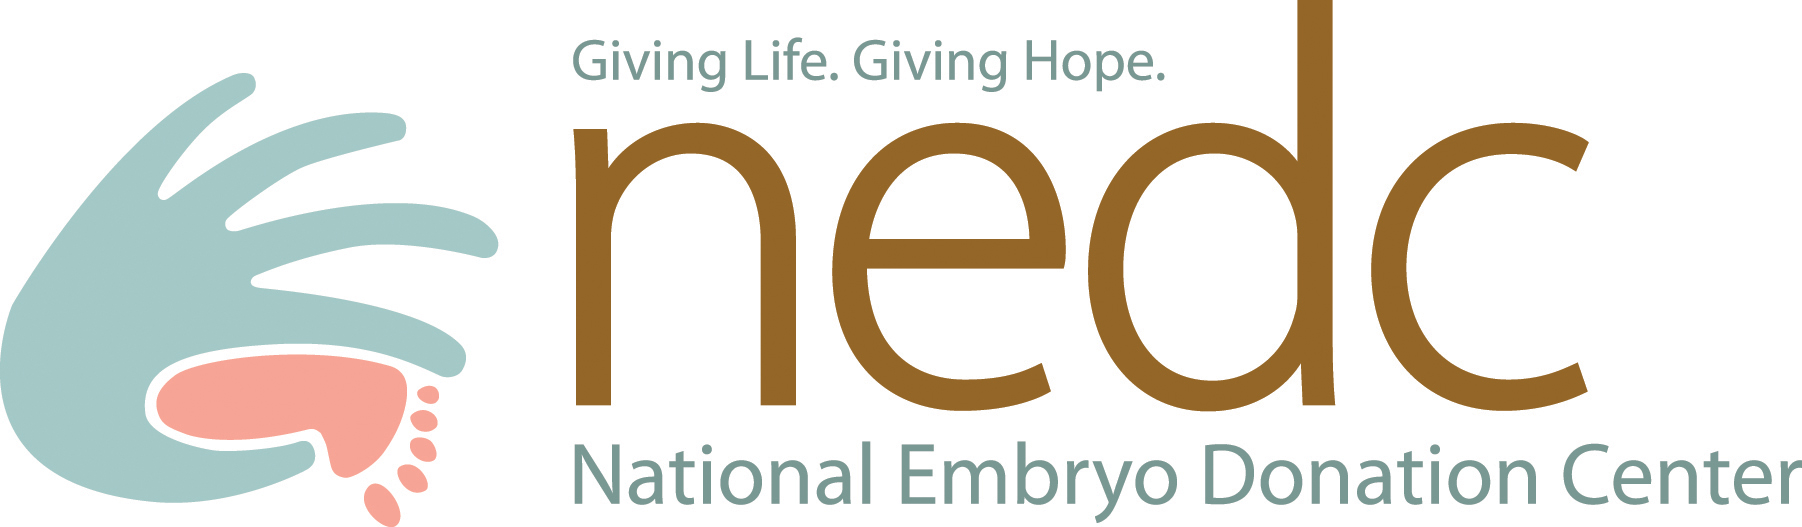 NATIONAL EMBRYO DONATION CENTER (NEDC) Logo